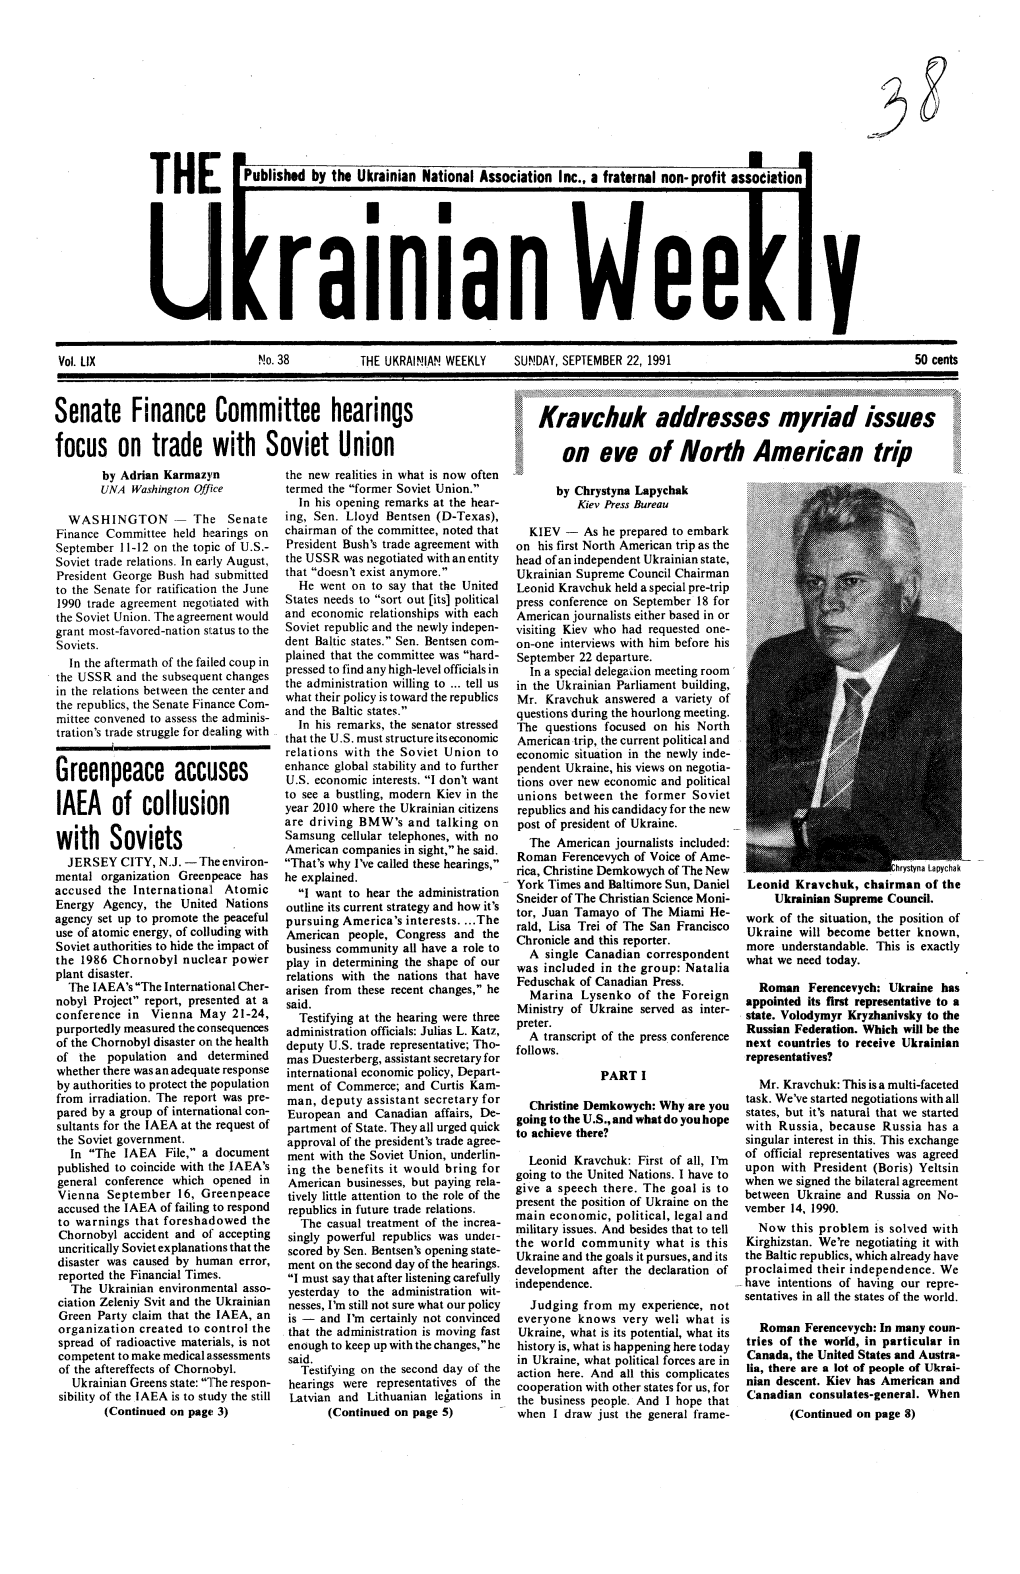 The Ukrainian Weekly 1991, No.38